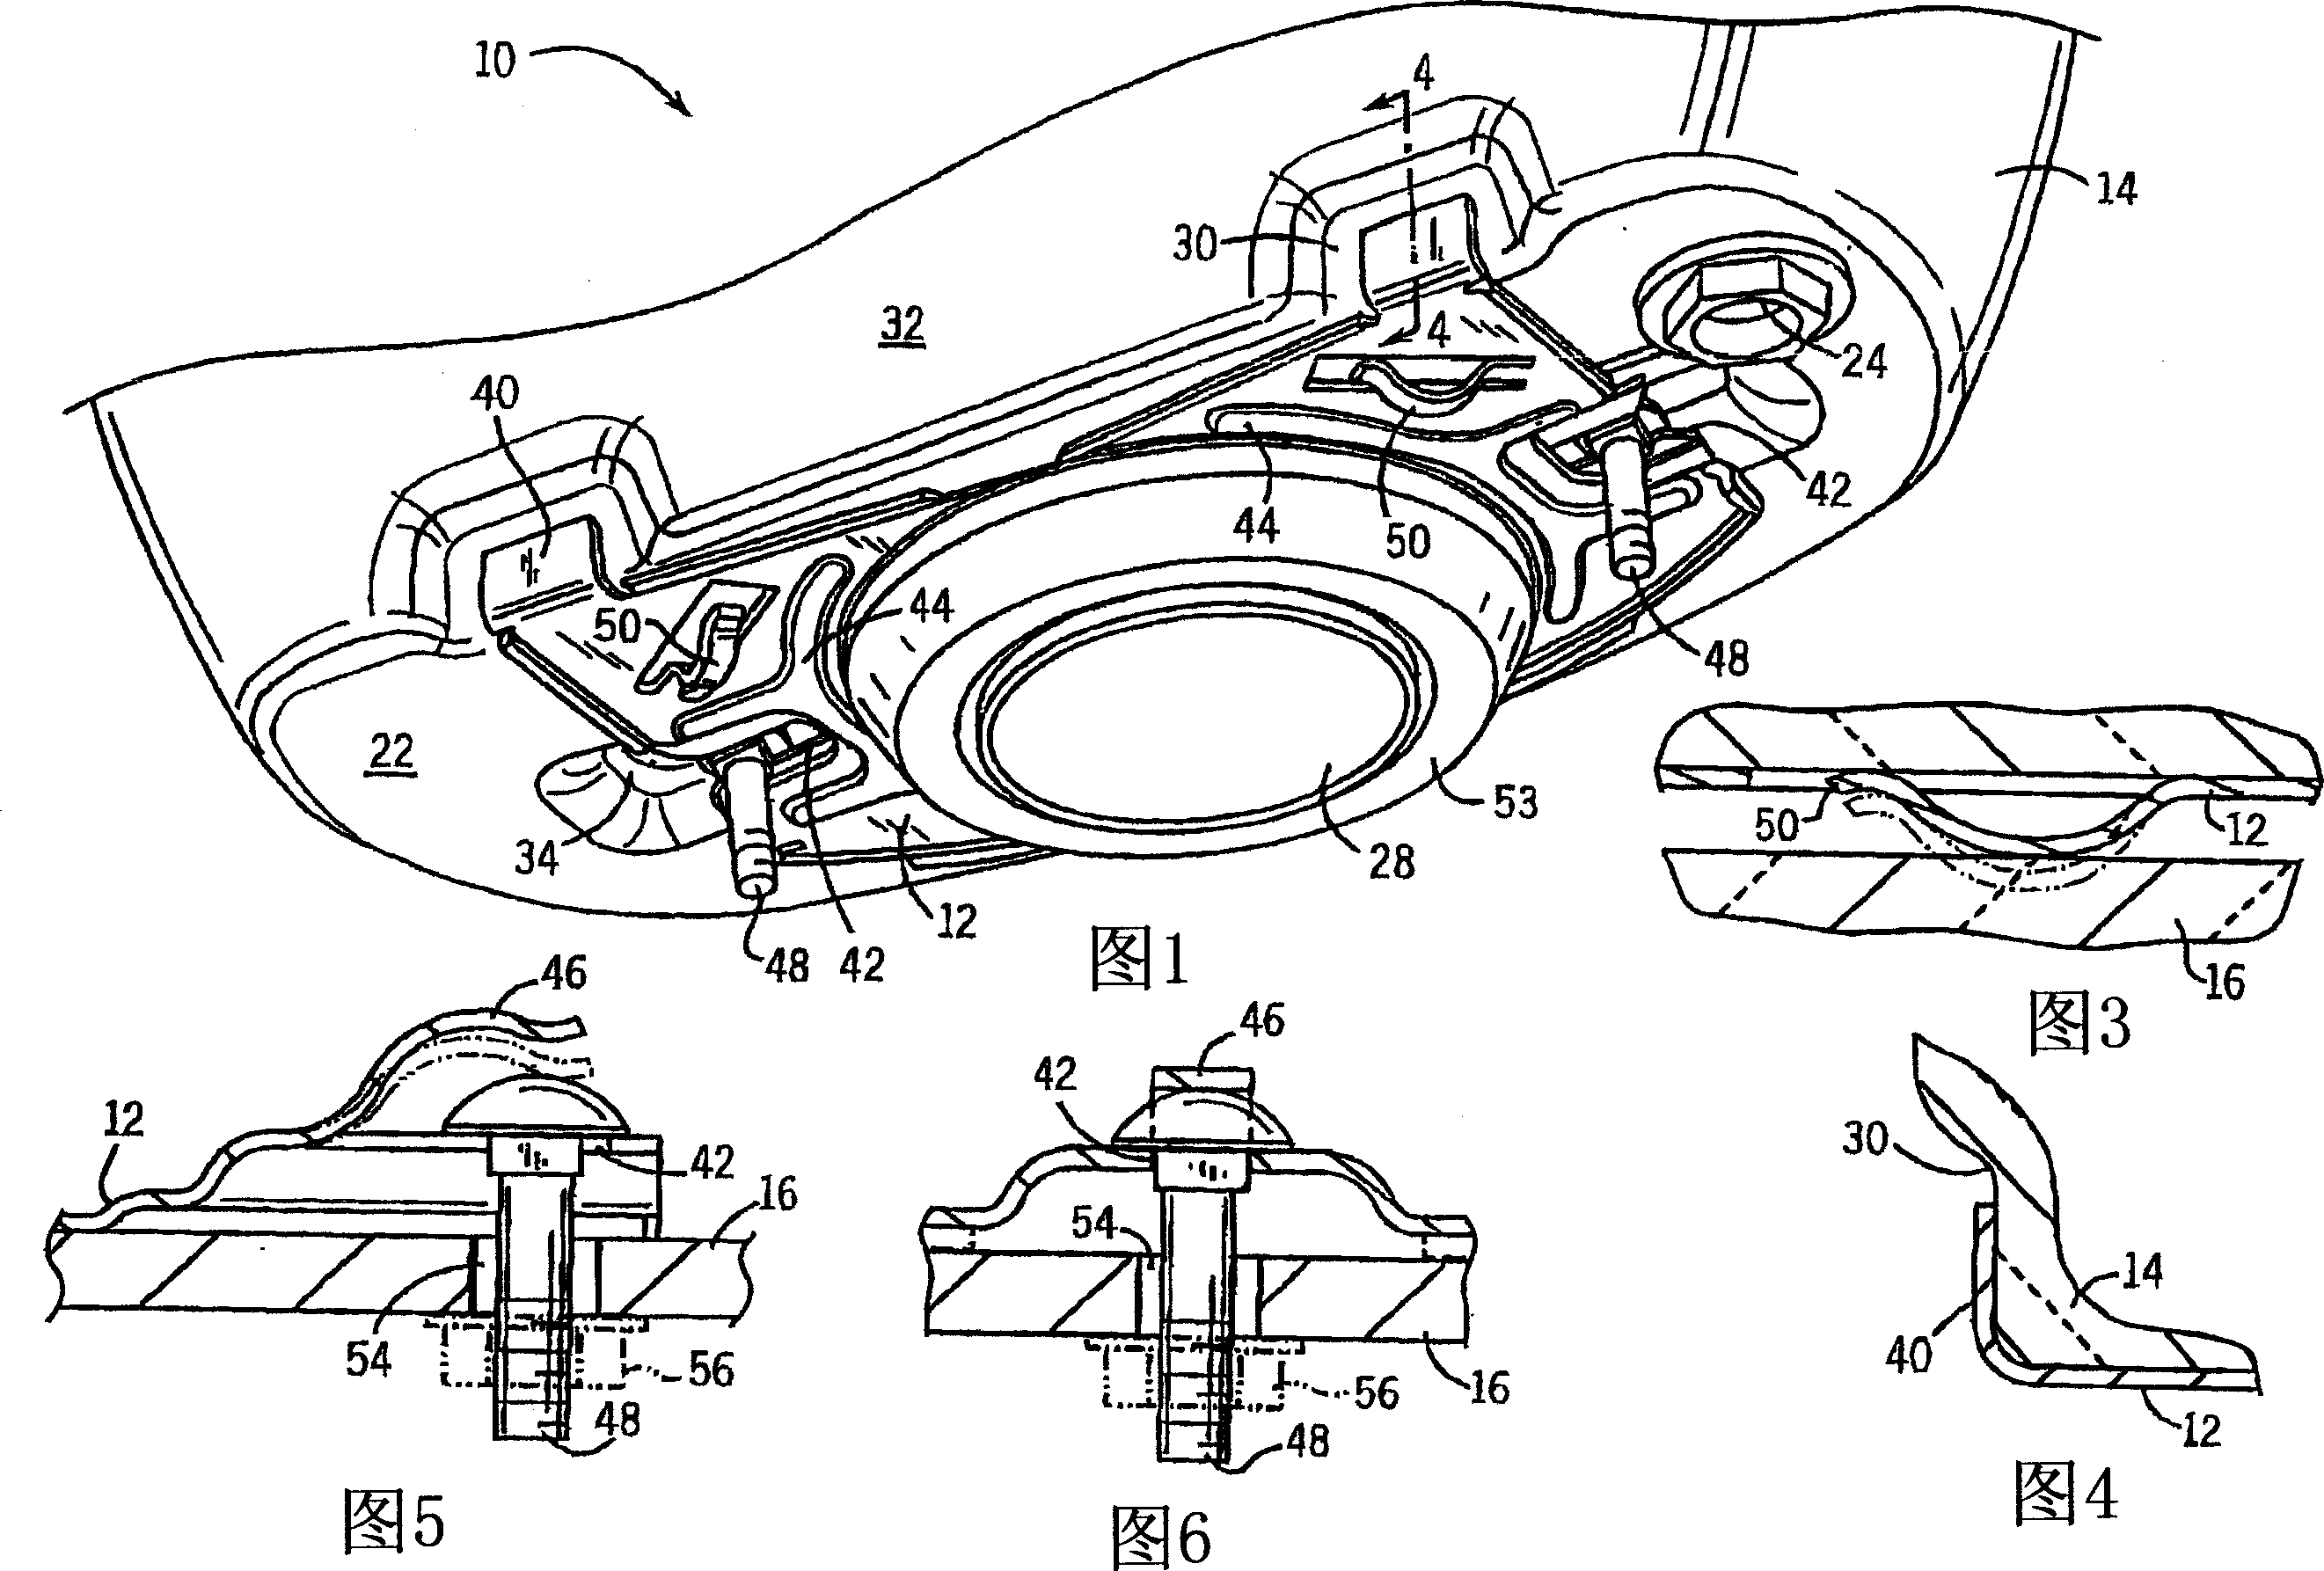 Toilet tank attachment bracket with unitary spring arm